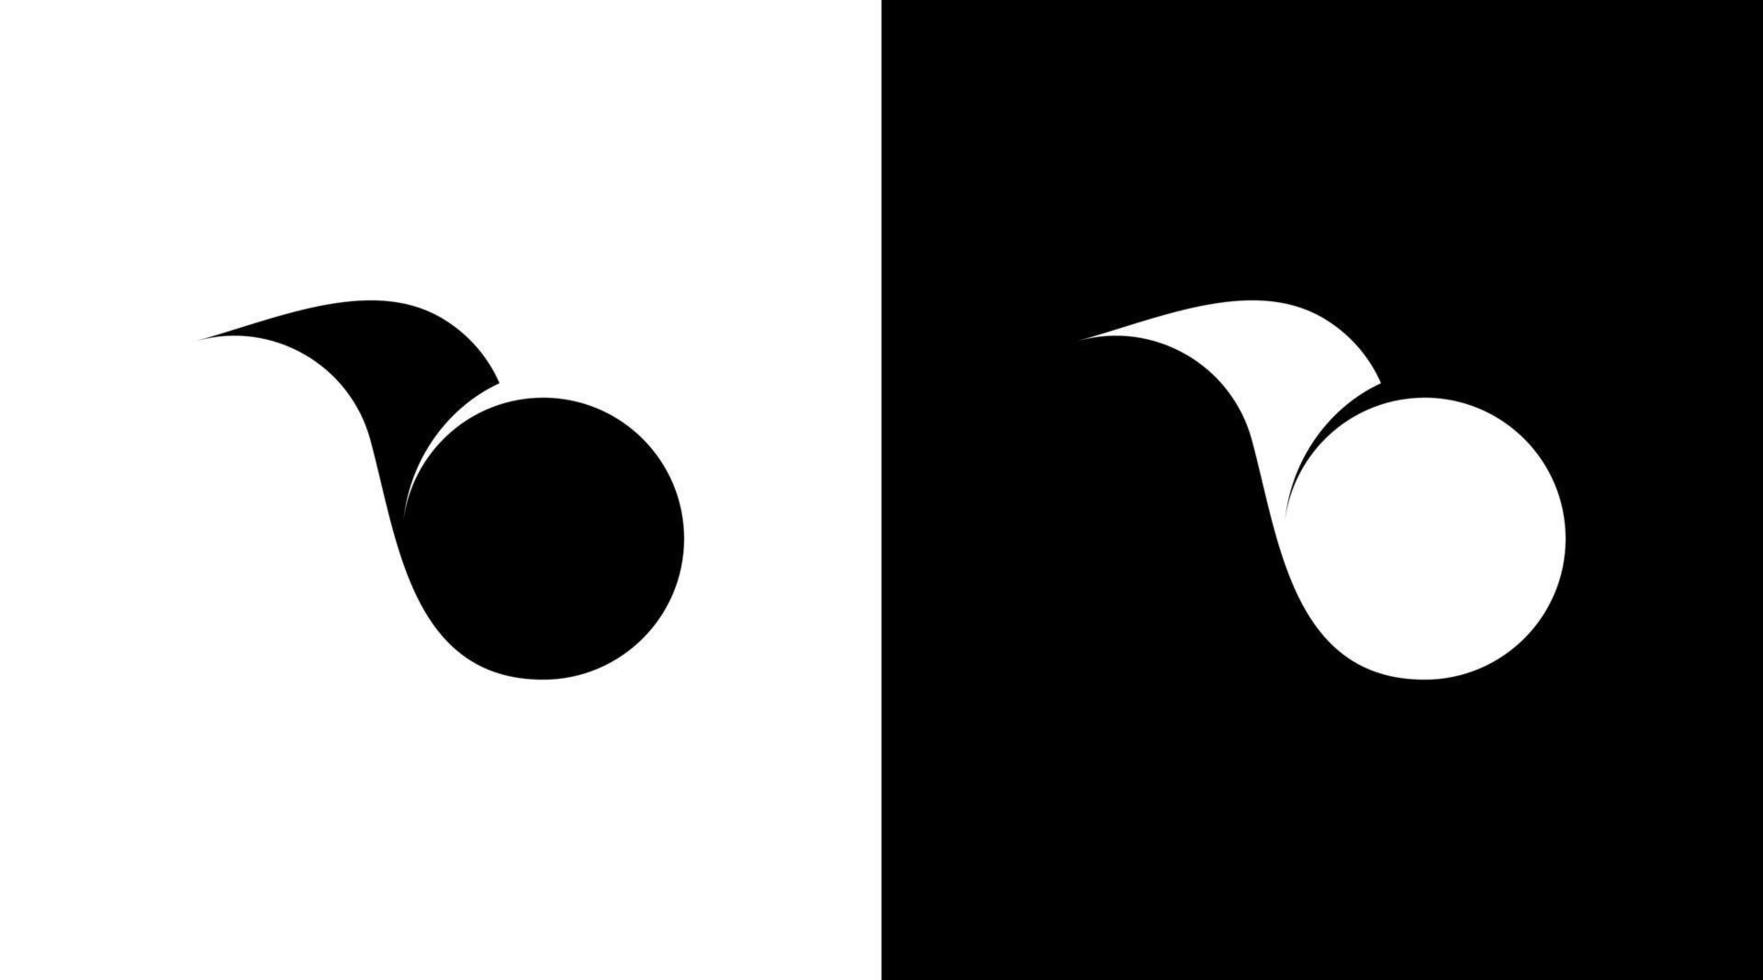 logotipo animal kiwi pássaro monograma letra b inicial ícone preto e branco ilustração modelos de designs de estilo vetor